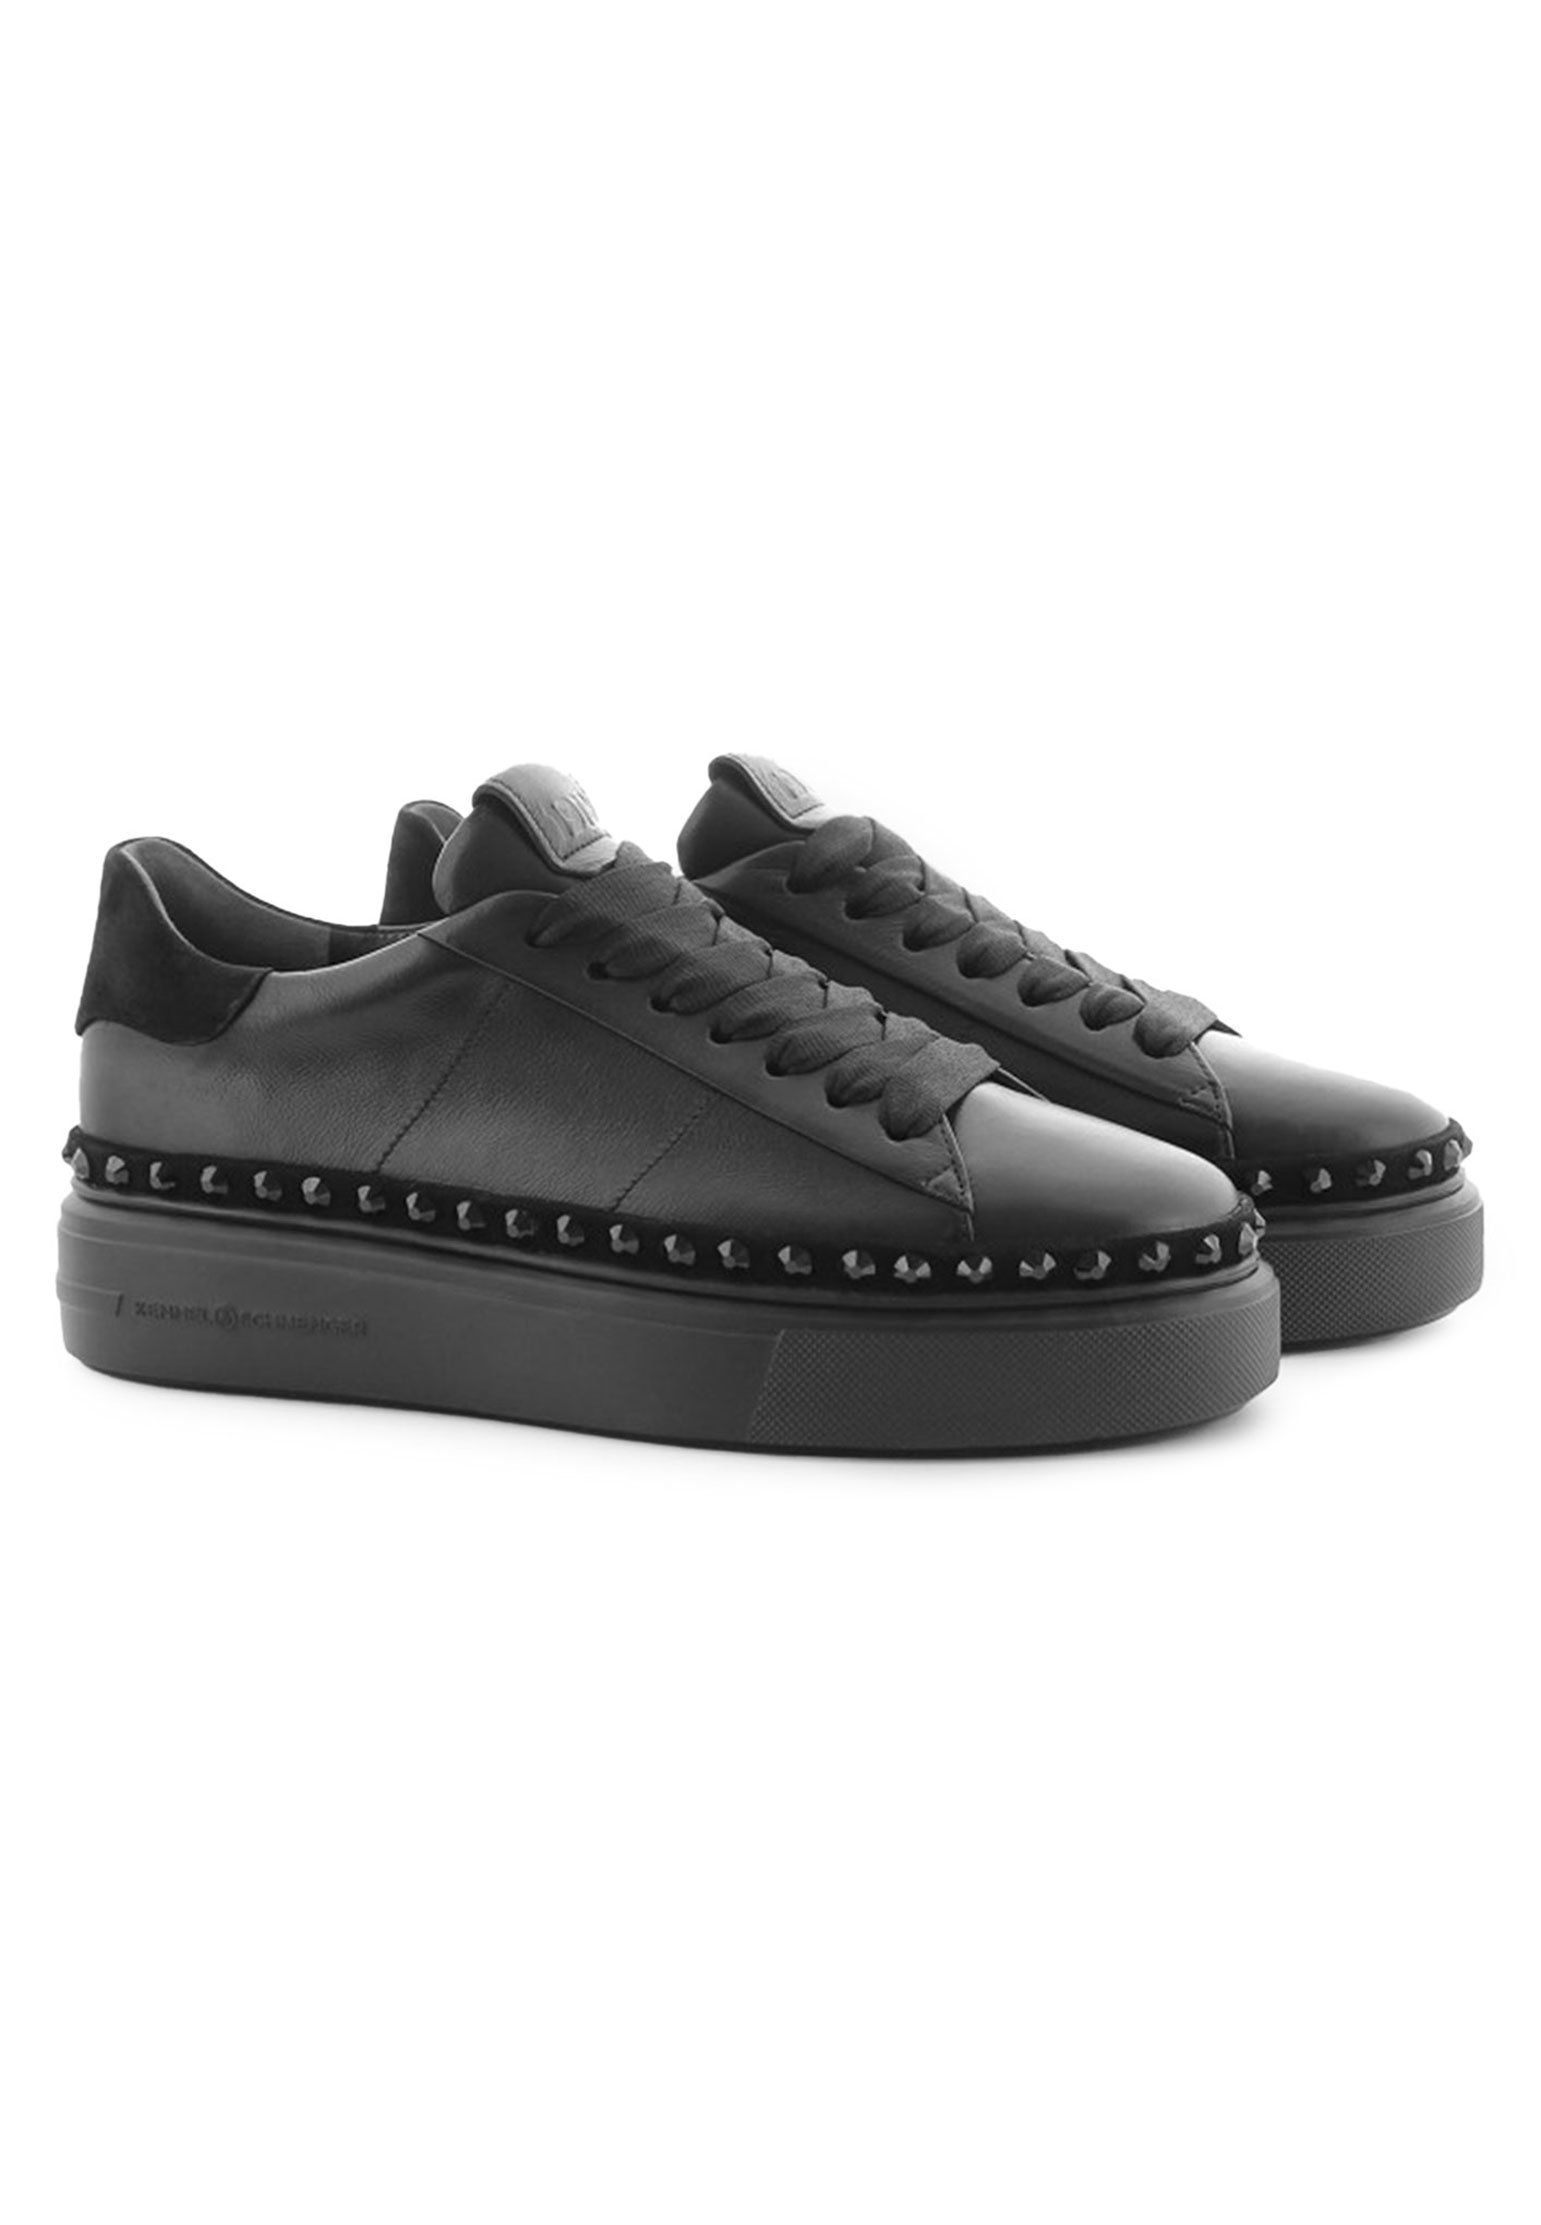 Flat shoes KENNEL&SCHMENGER Color: black (Code: 4166) in online store Allure